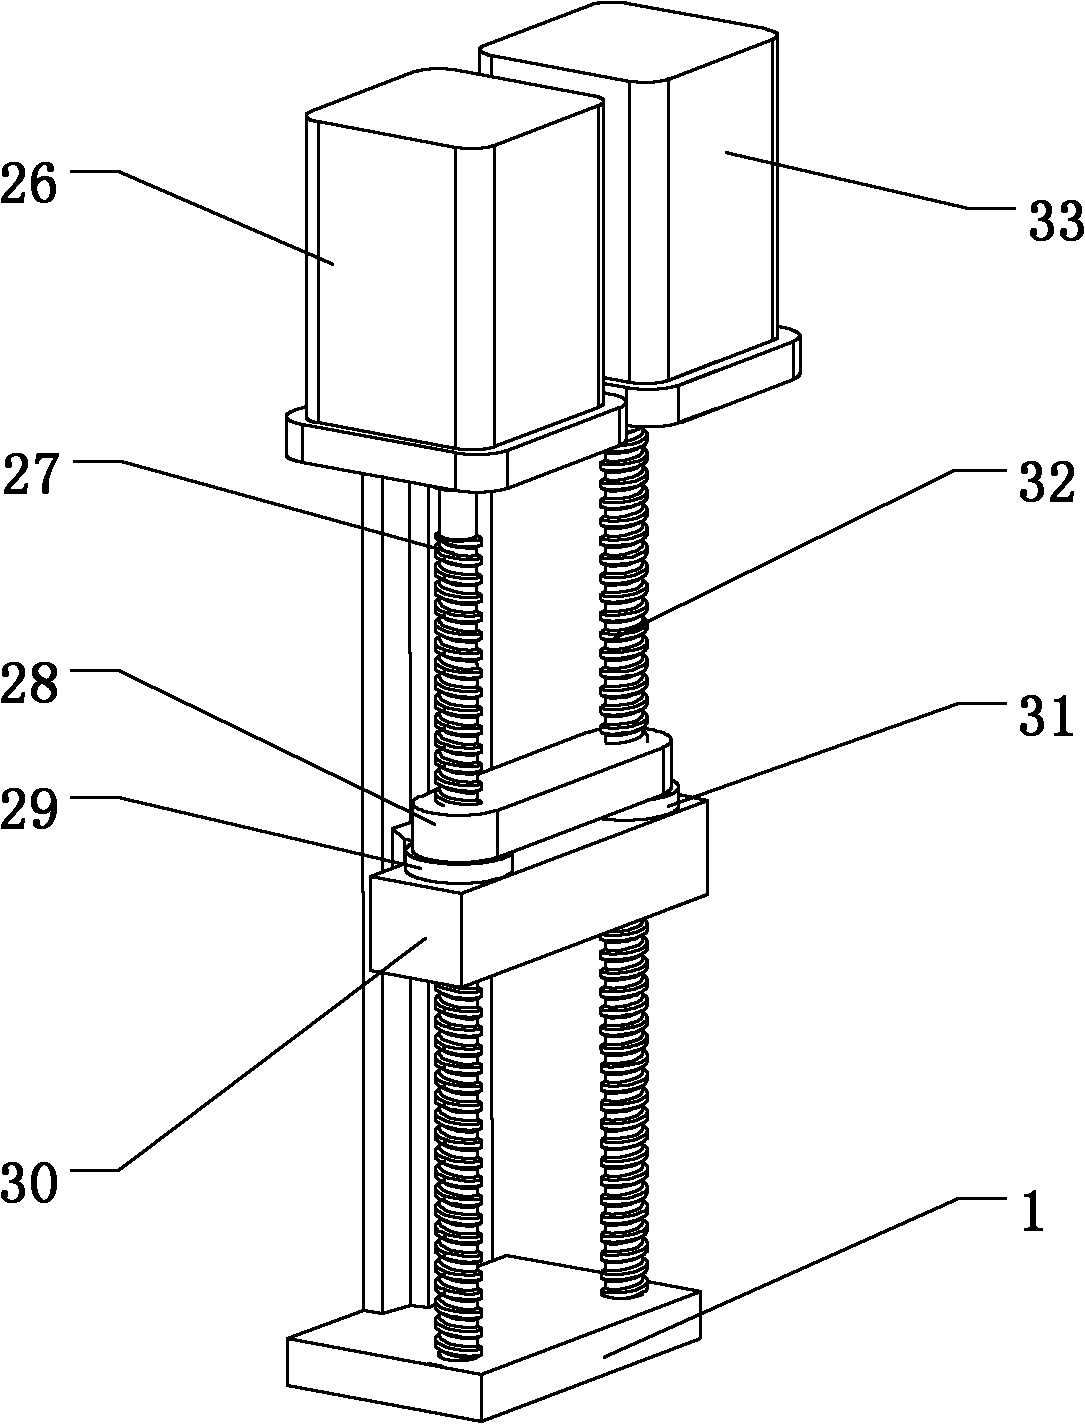 Twelve-motor parallel drive multi-link mechanical servo press